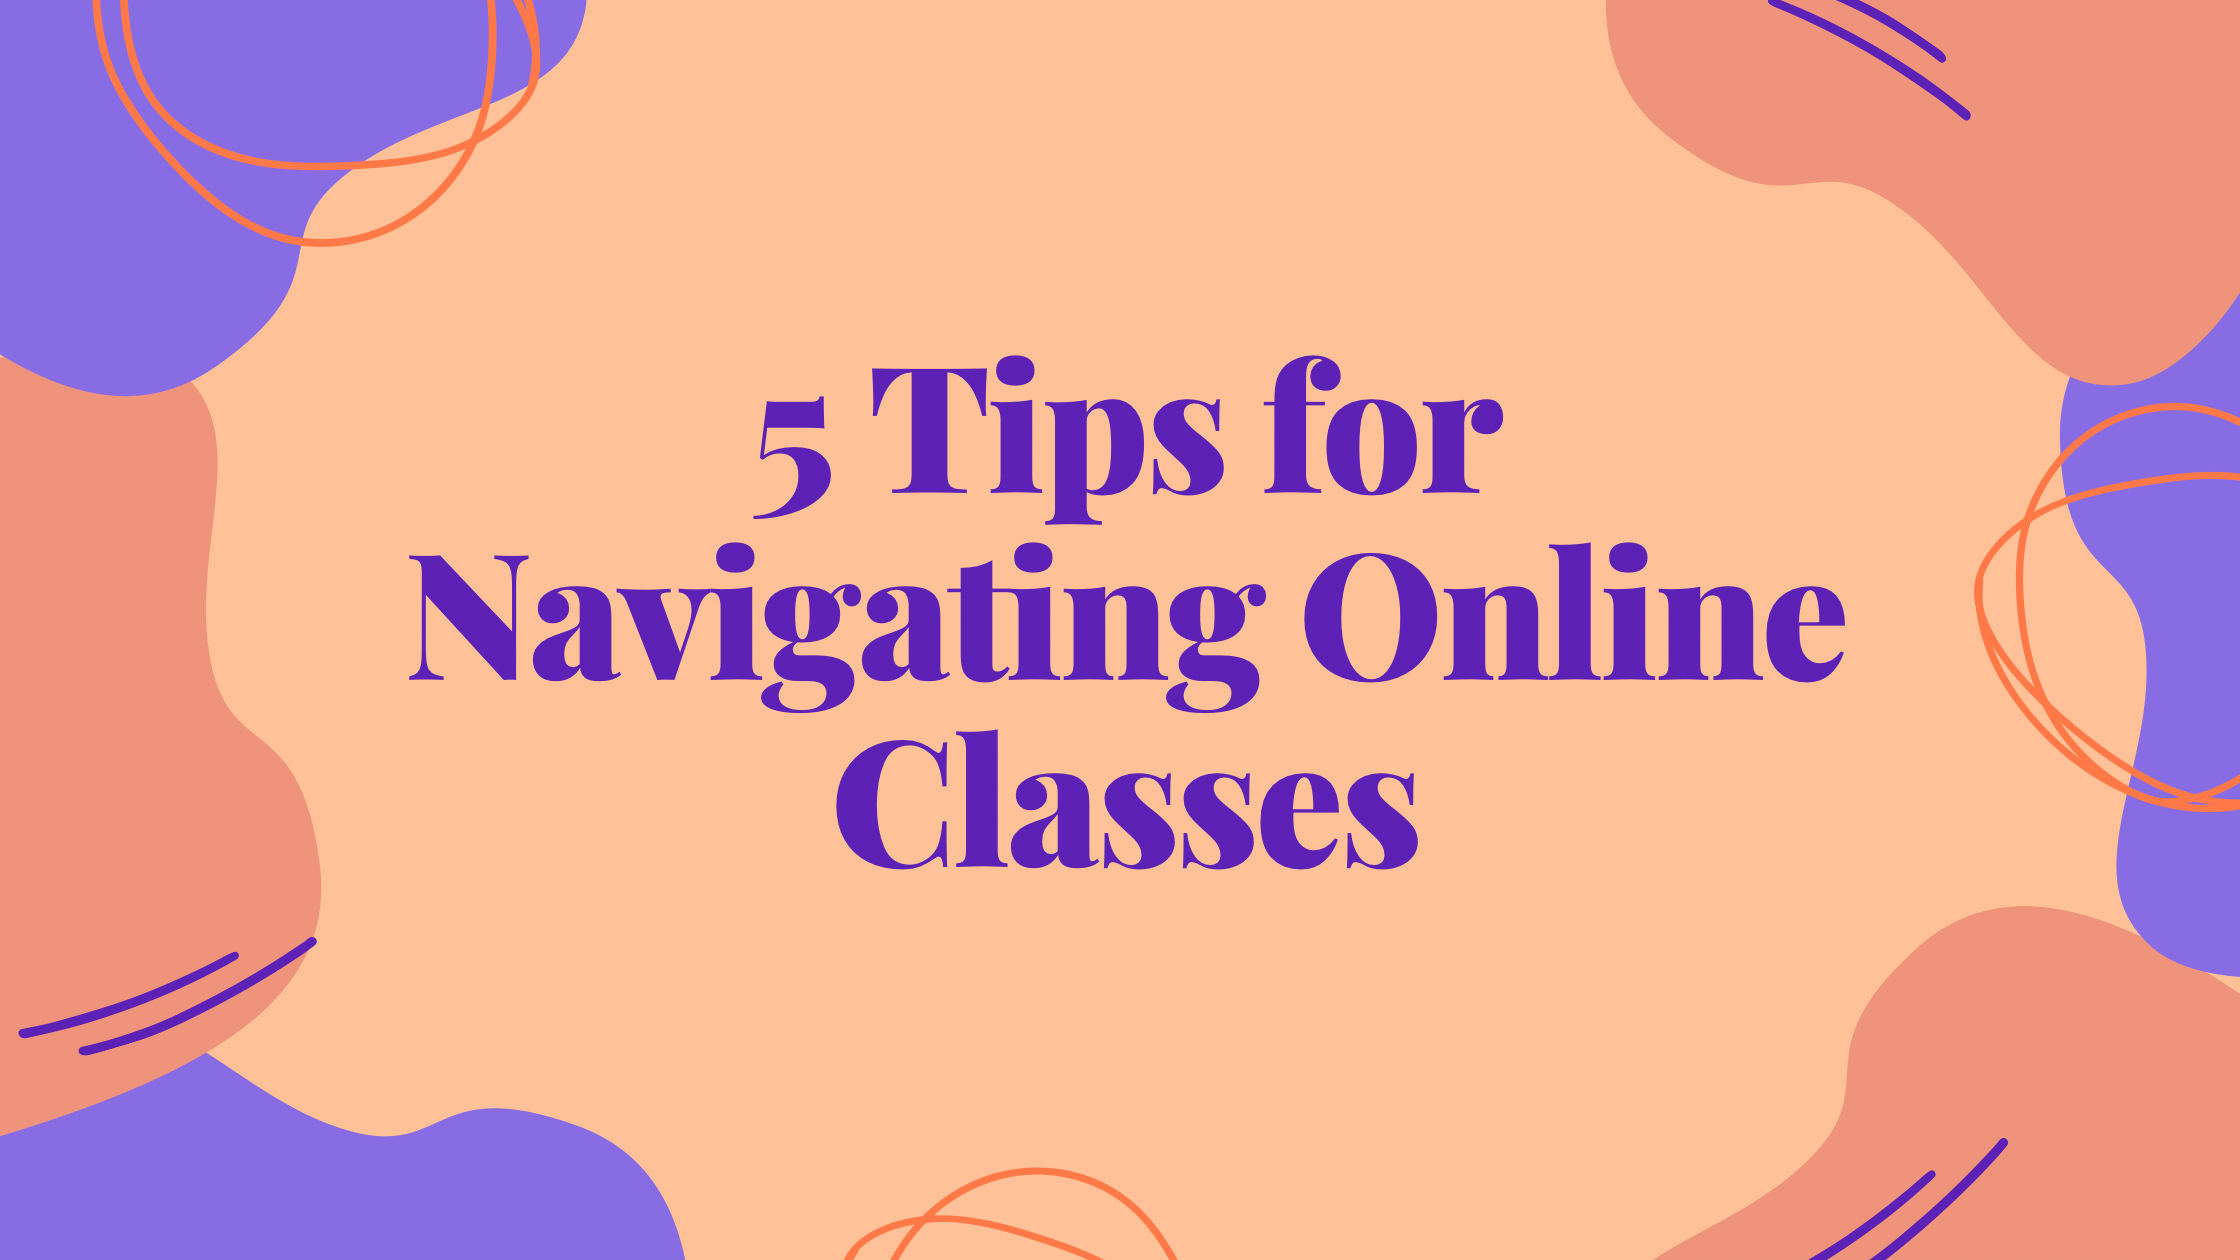 “5 Tips for Navigating Online Classes” written over orange background